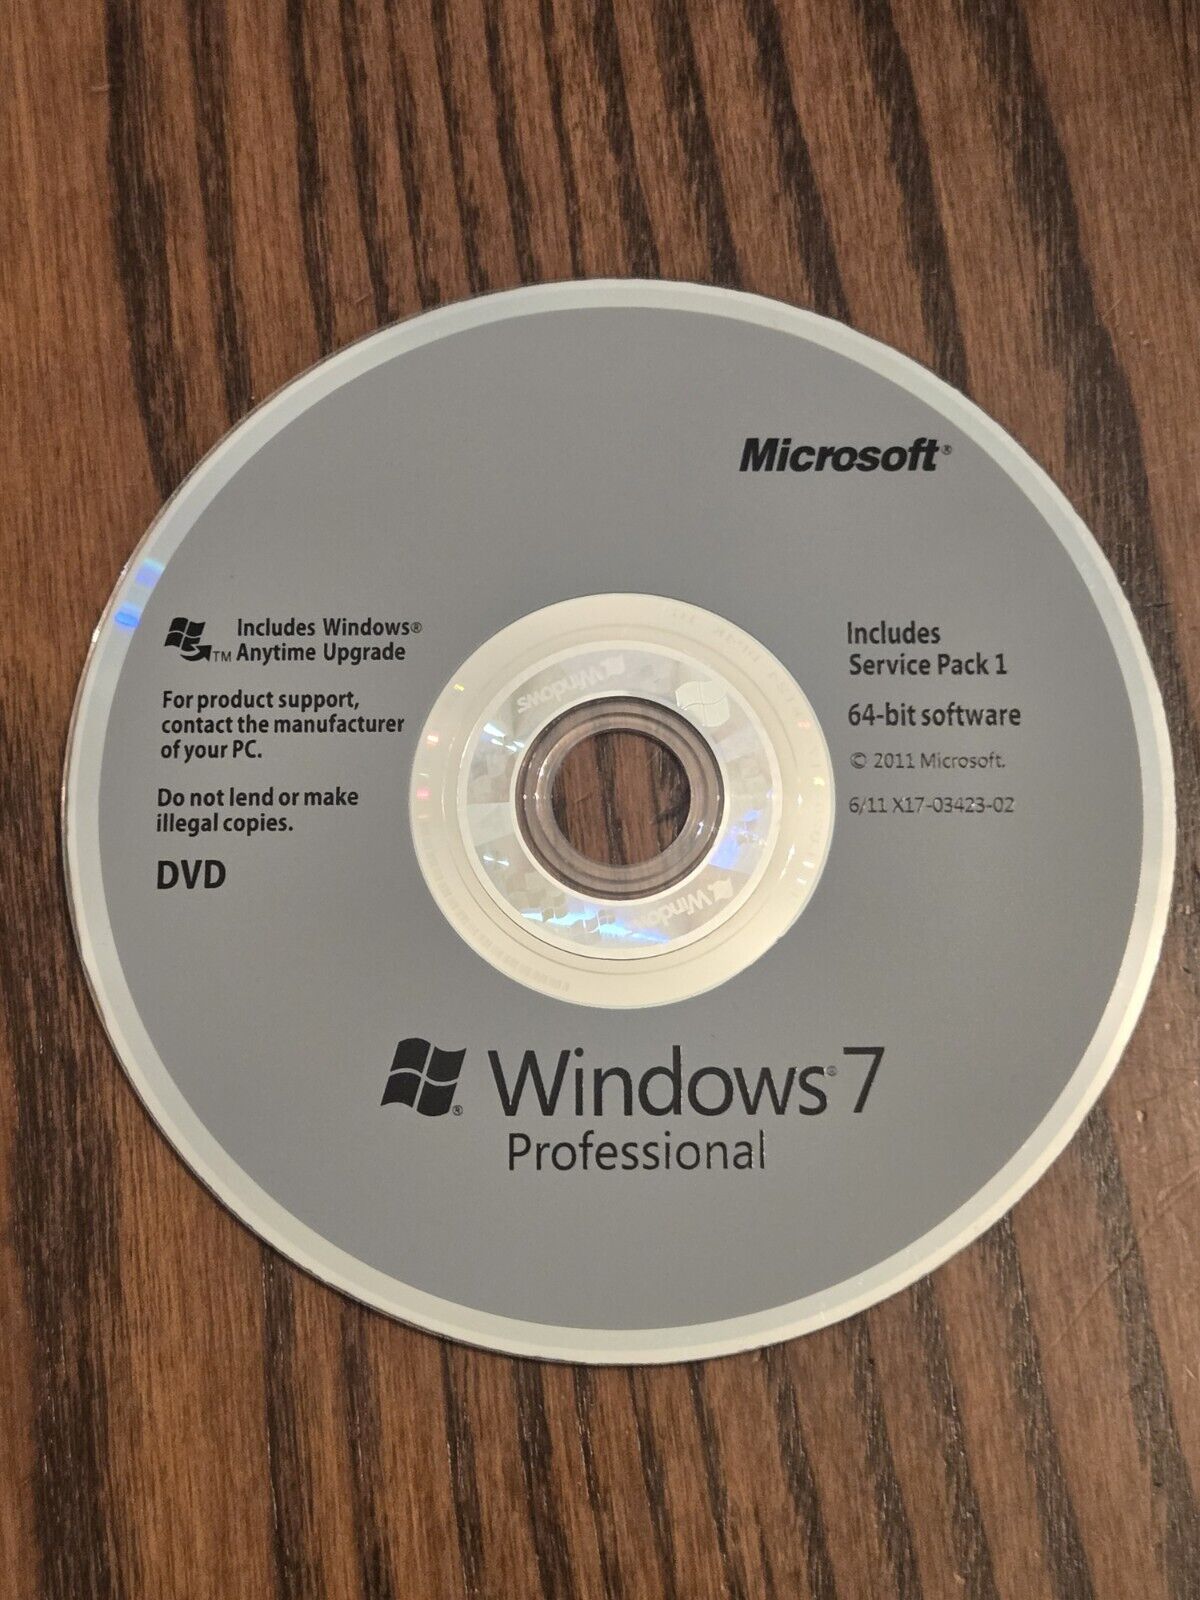 Windows 7 Pro Professional x64 64Bit  Full Version SP1 DVD, w Product Key